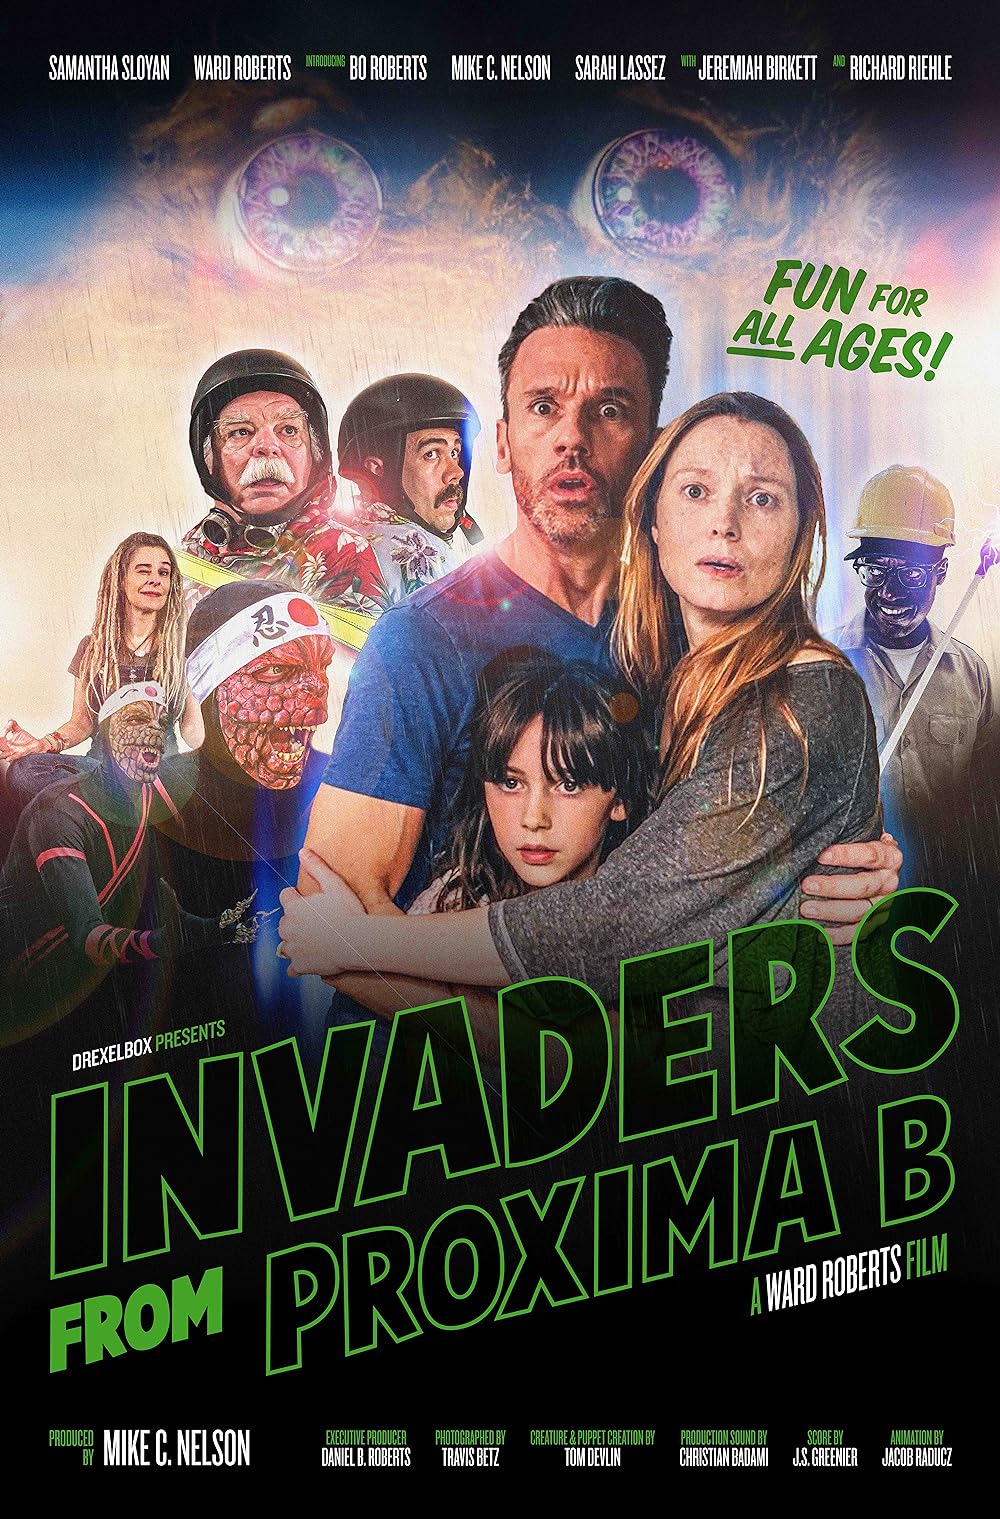 Фантастическая комедия Invaders from Proxima B - Постер